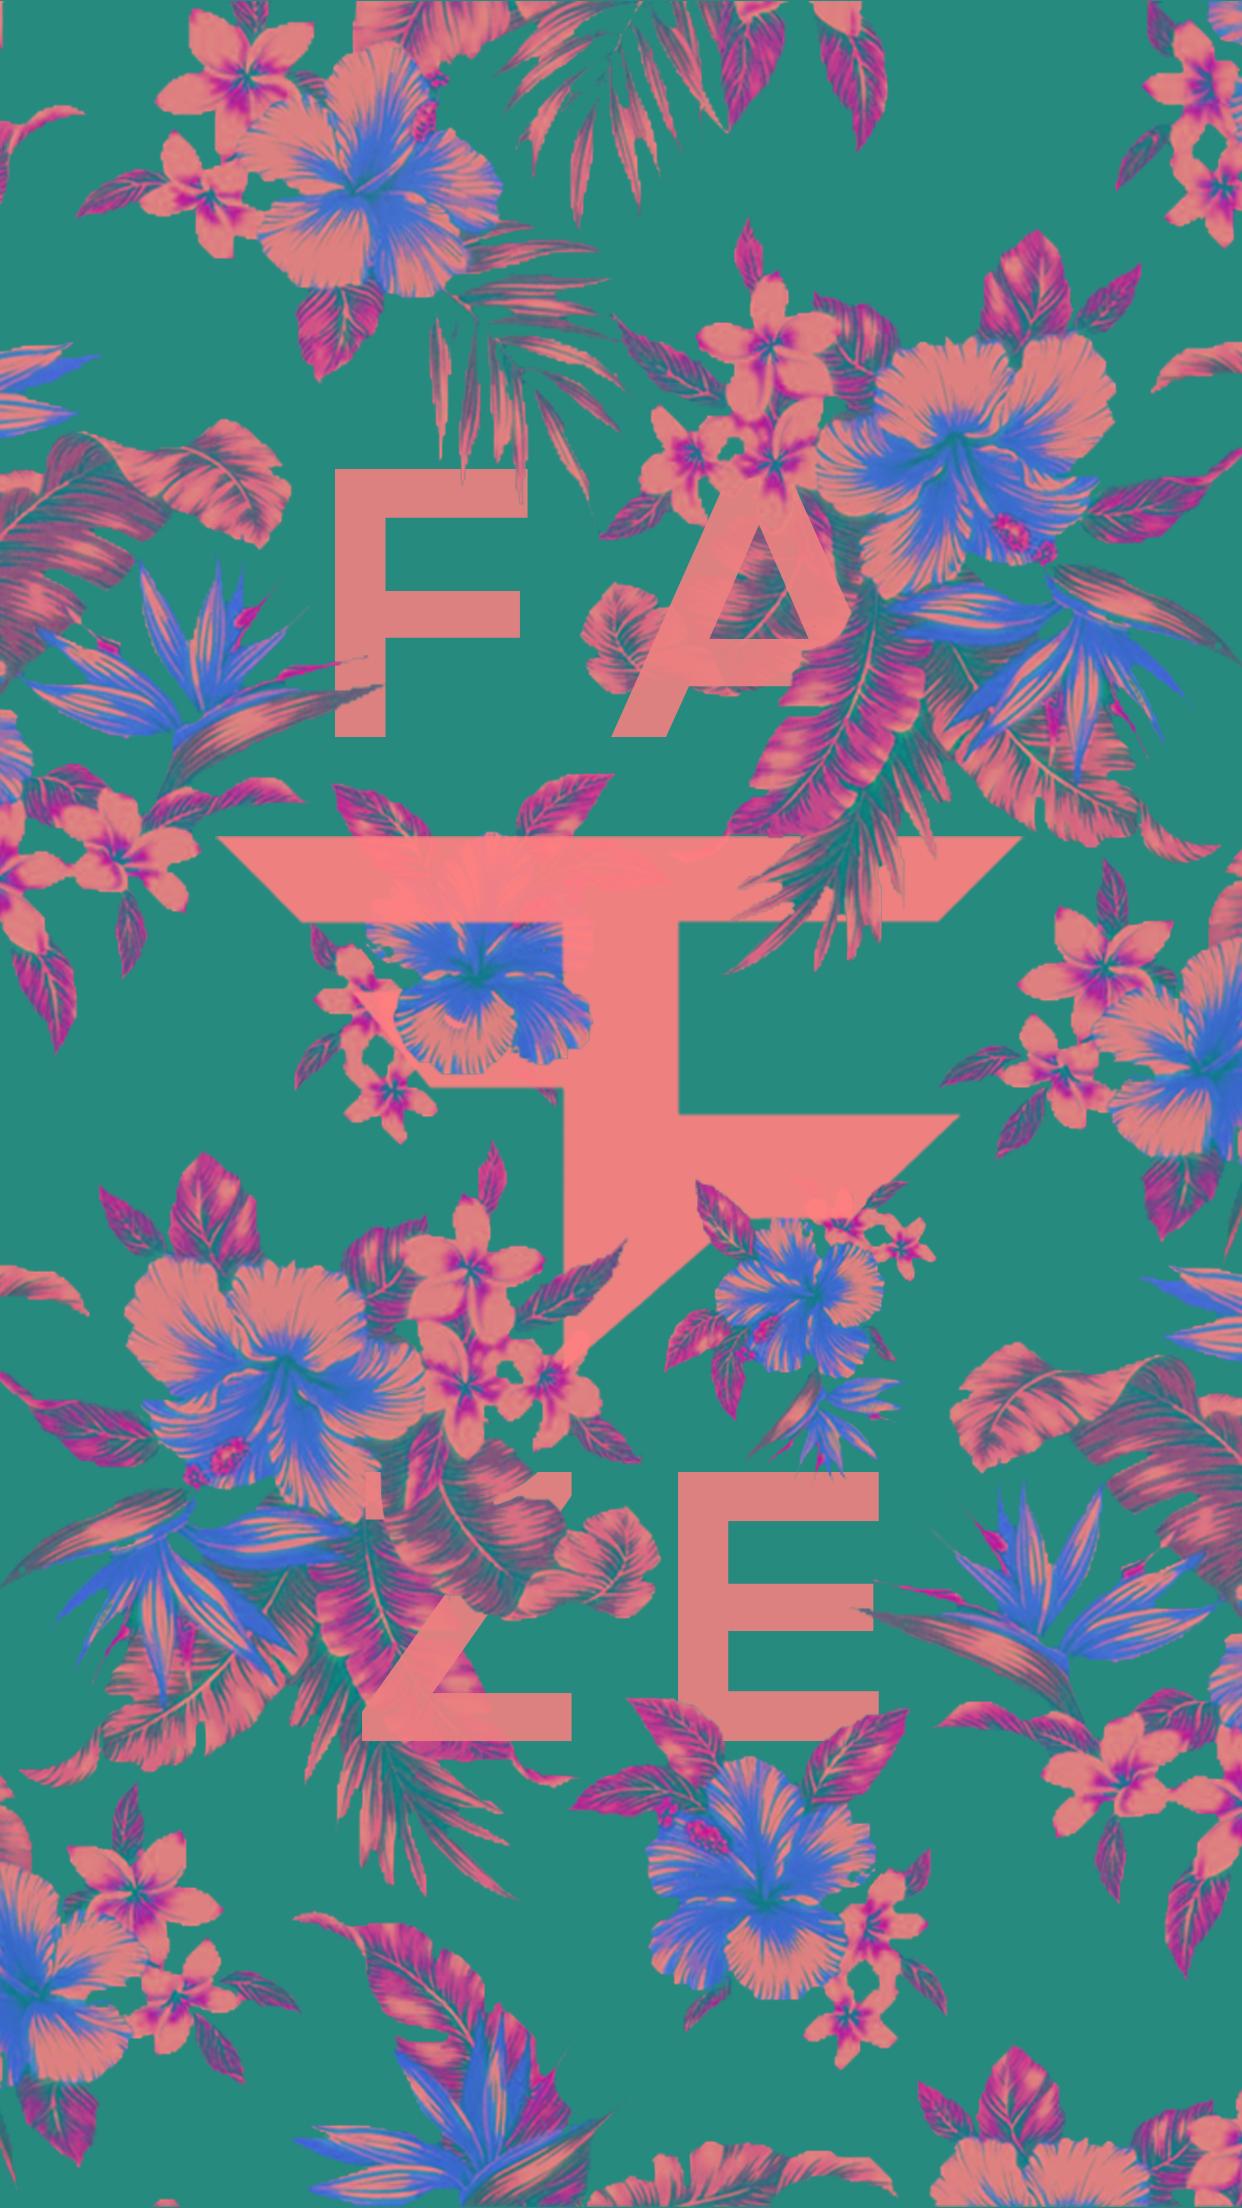 Free download Faze Logo Wallpaper Iphone Faze clan wallpaper by [900x506]  for your Desktop, Mobile & Tablet | Explore 46+ FaZe Clan iPhone Wallpaper  | FaZe Clan Wallpaper Download, FaZe Clan 1080p